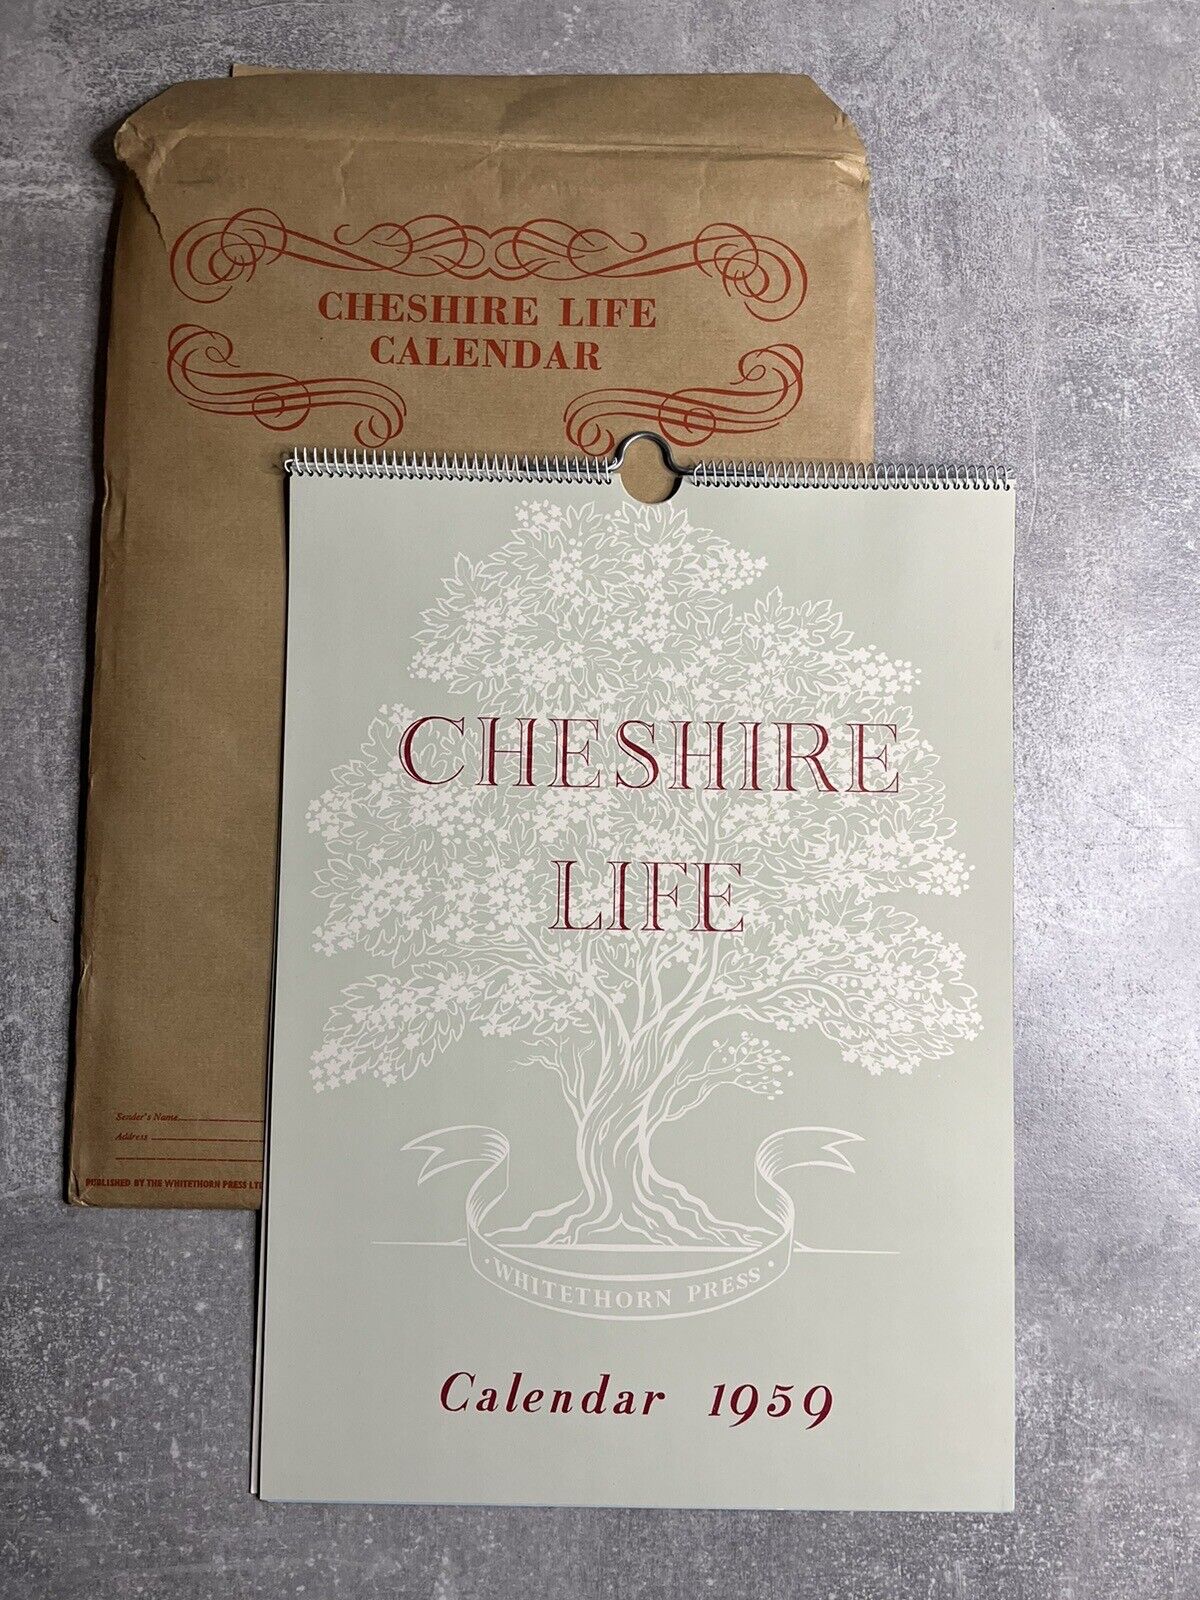 Vintage 1959 Calendar - Cheshire Life - Unused with original protective envelope